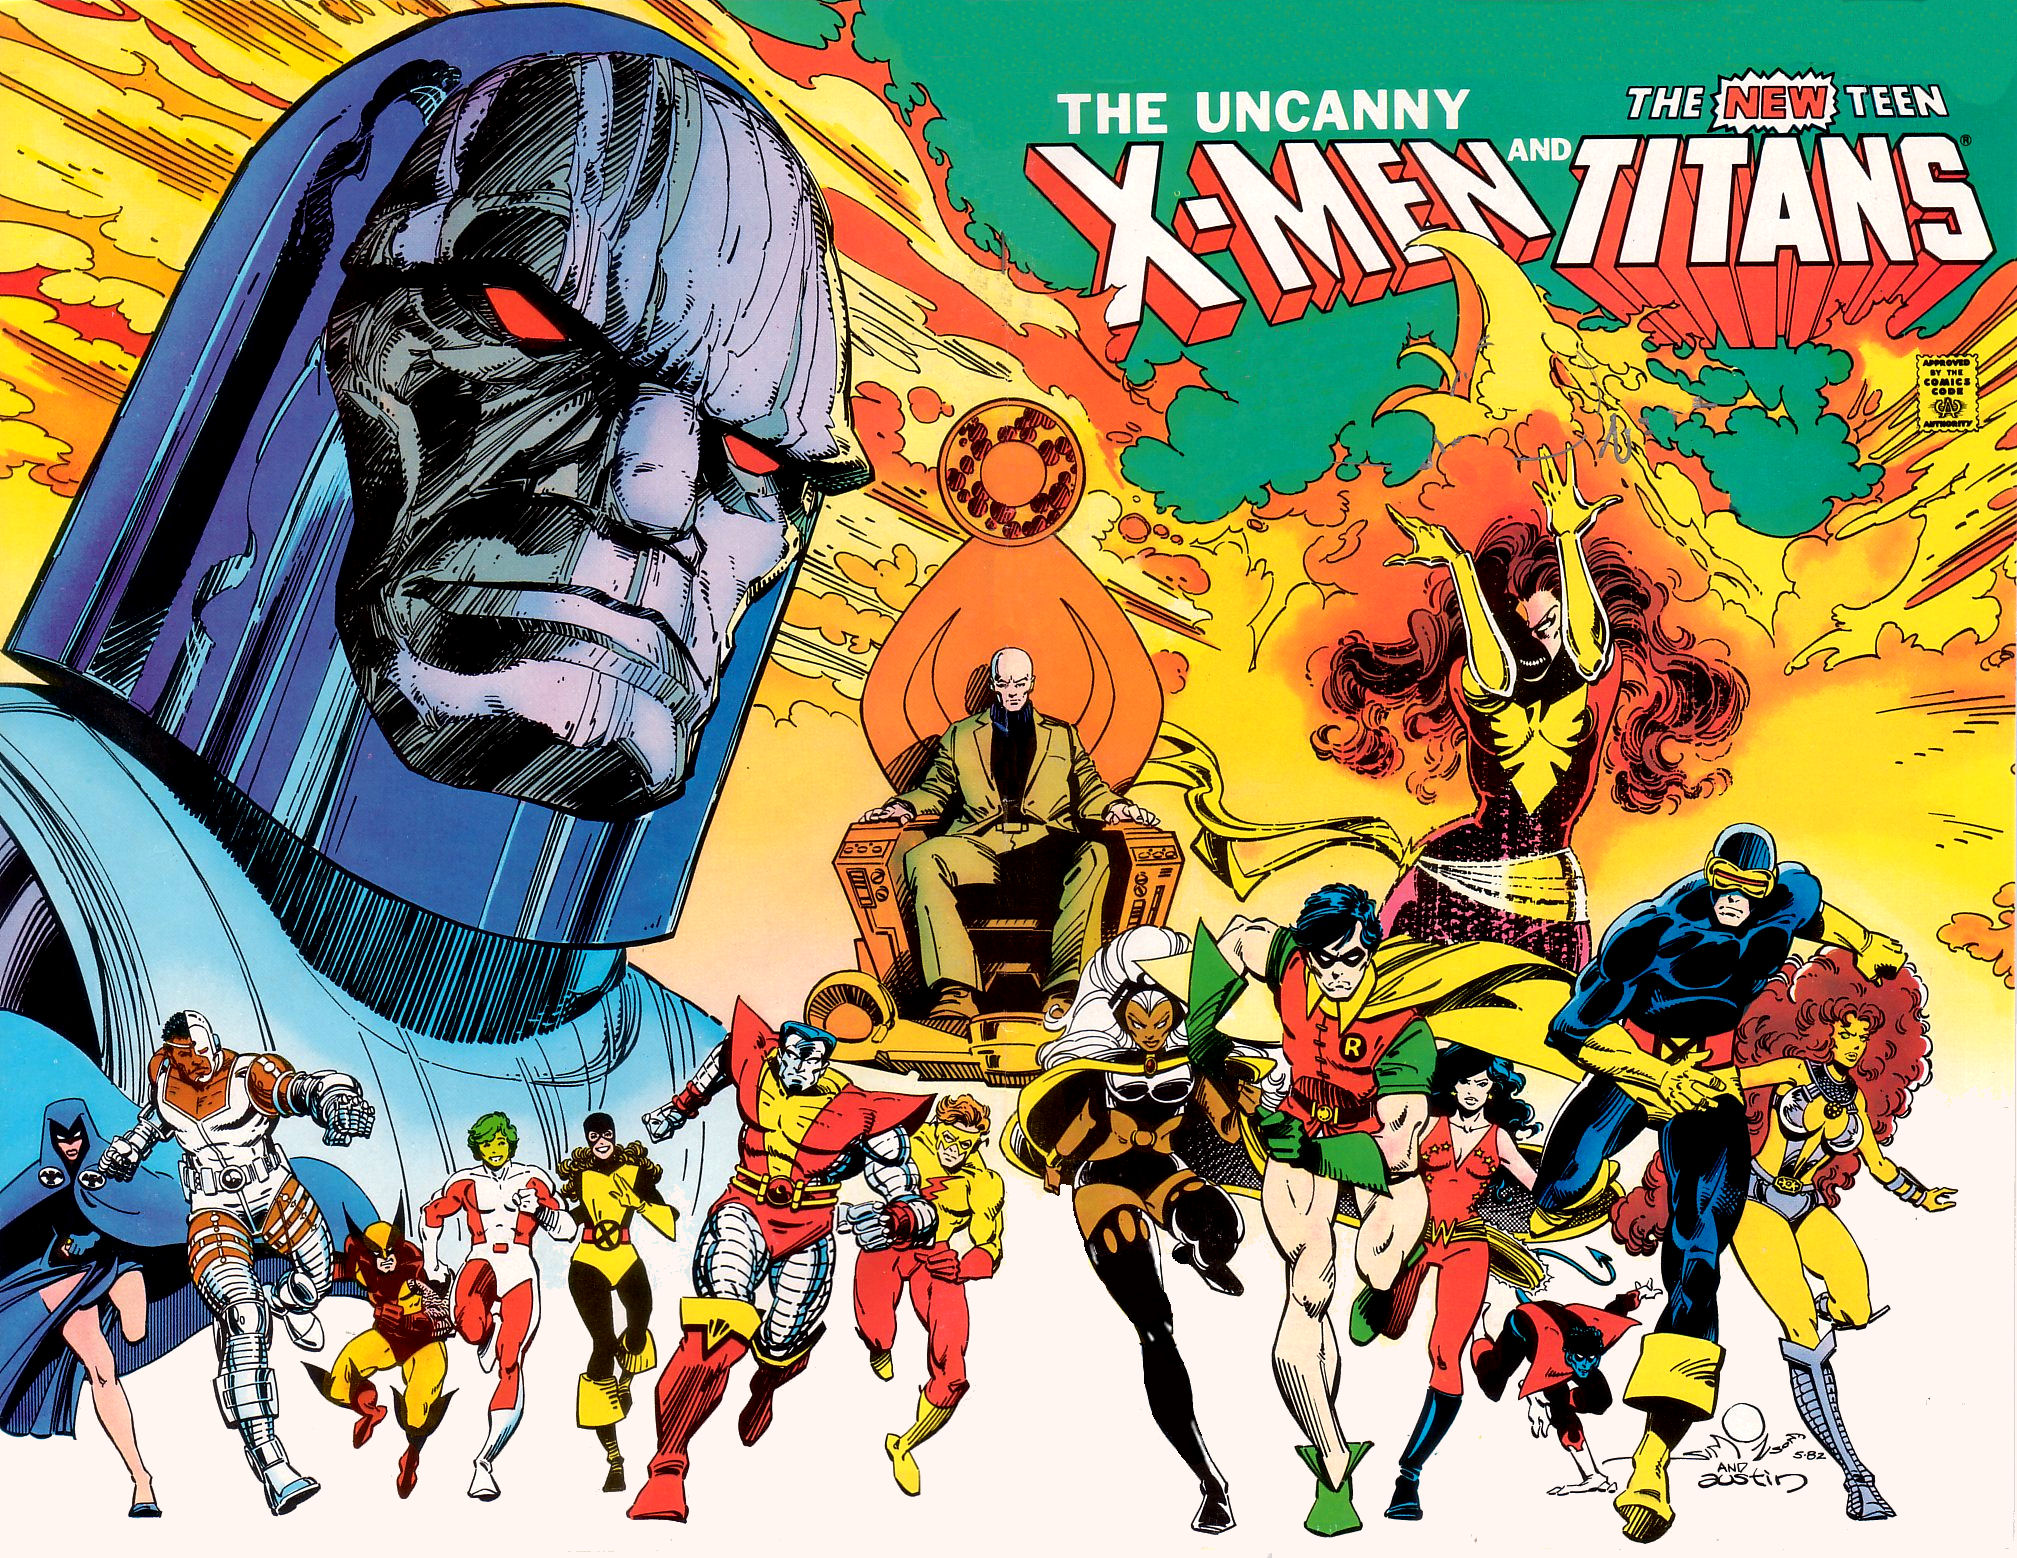 comics, the uncanny x men and the new teen titans, beast boy, charles xavier, colossus, cyborg (dc comics), cyclops (marvel comics), dark phoenix, darkseid (dc comics), dc comics, donna troy, garfield logan, jean grey, kid flash, kitty pryde, nightcrawler (marvel comics), phoenix (marvel comics), professor x, robin (dc comics), starfire (dc comics), storm (marvel comics), teen titans, uncanny x men, wally west, wolverine, wonder girl UHD